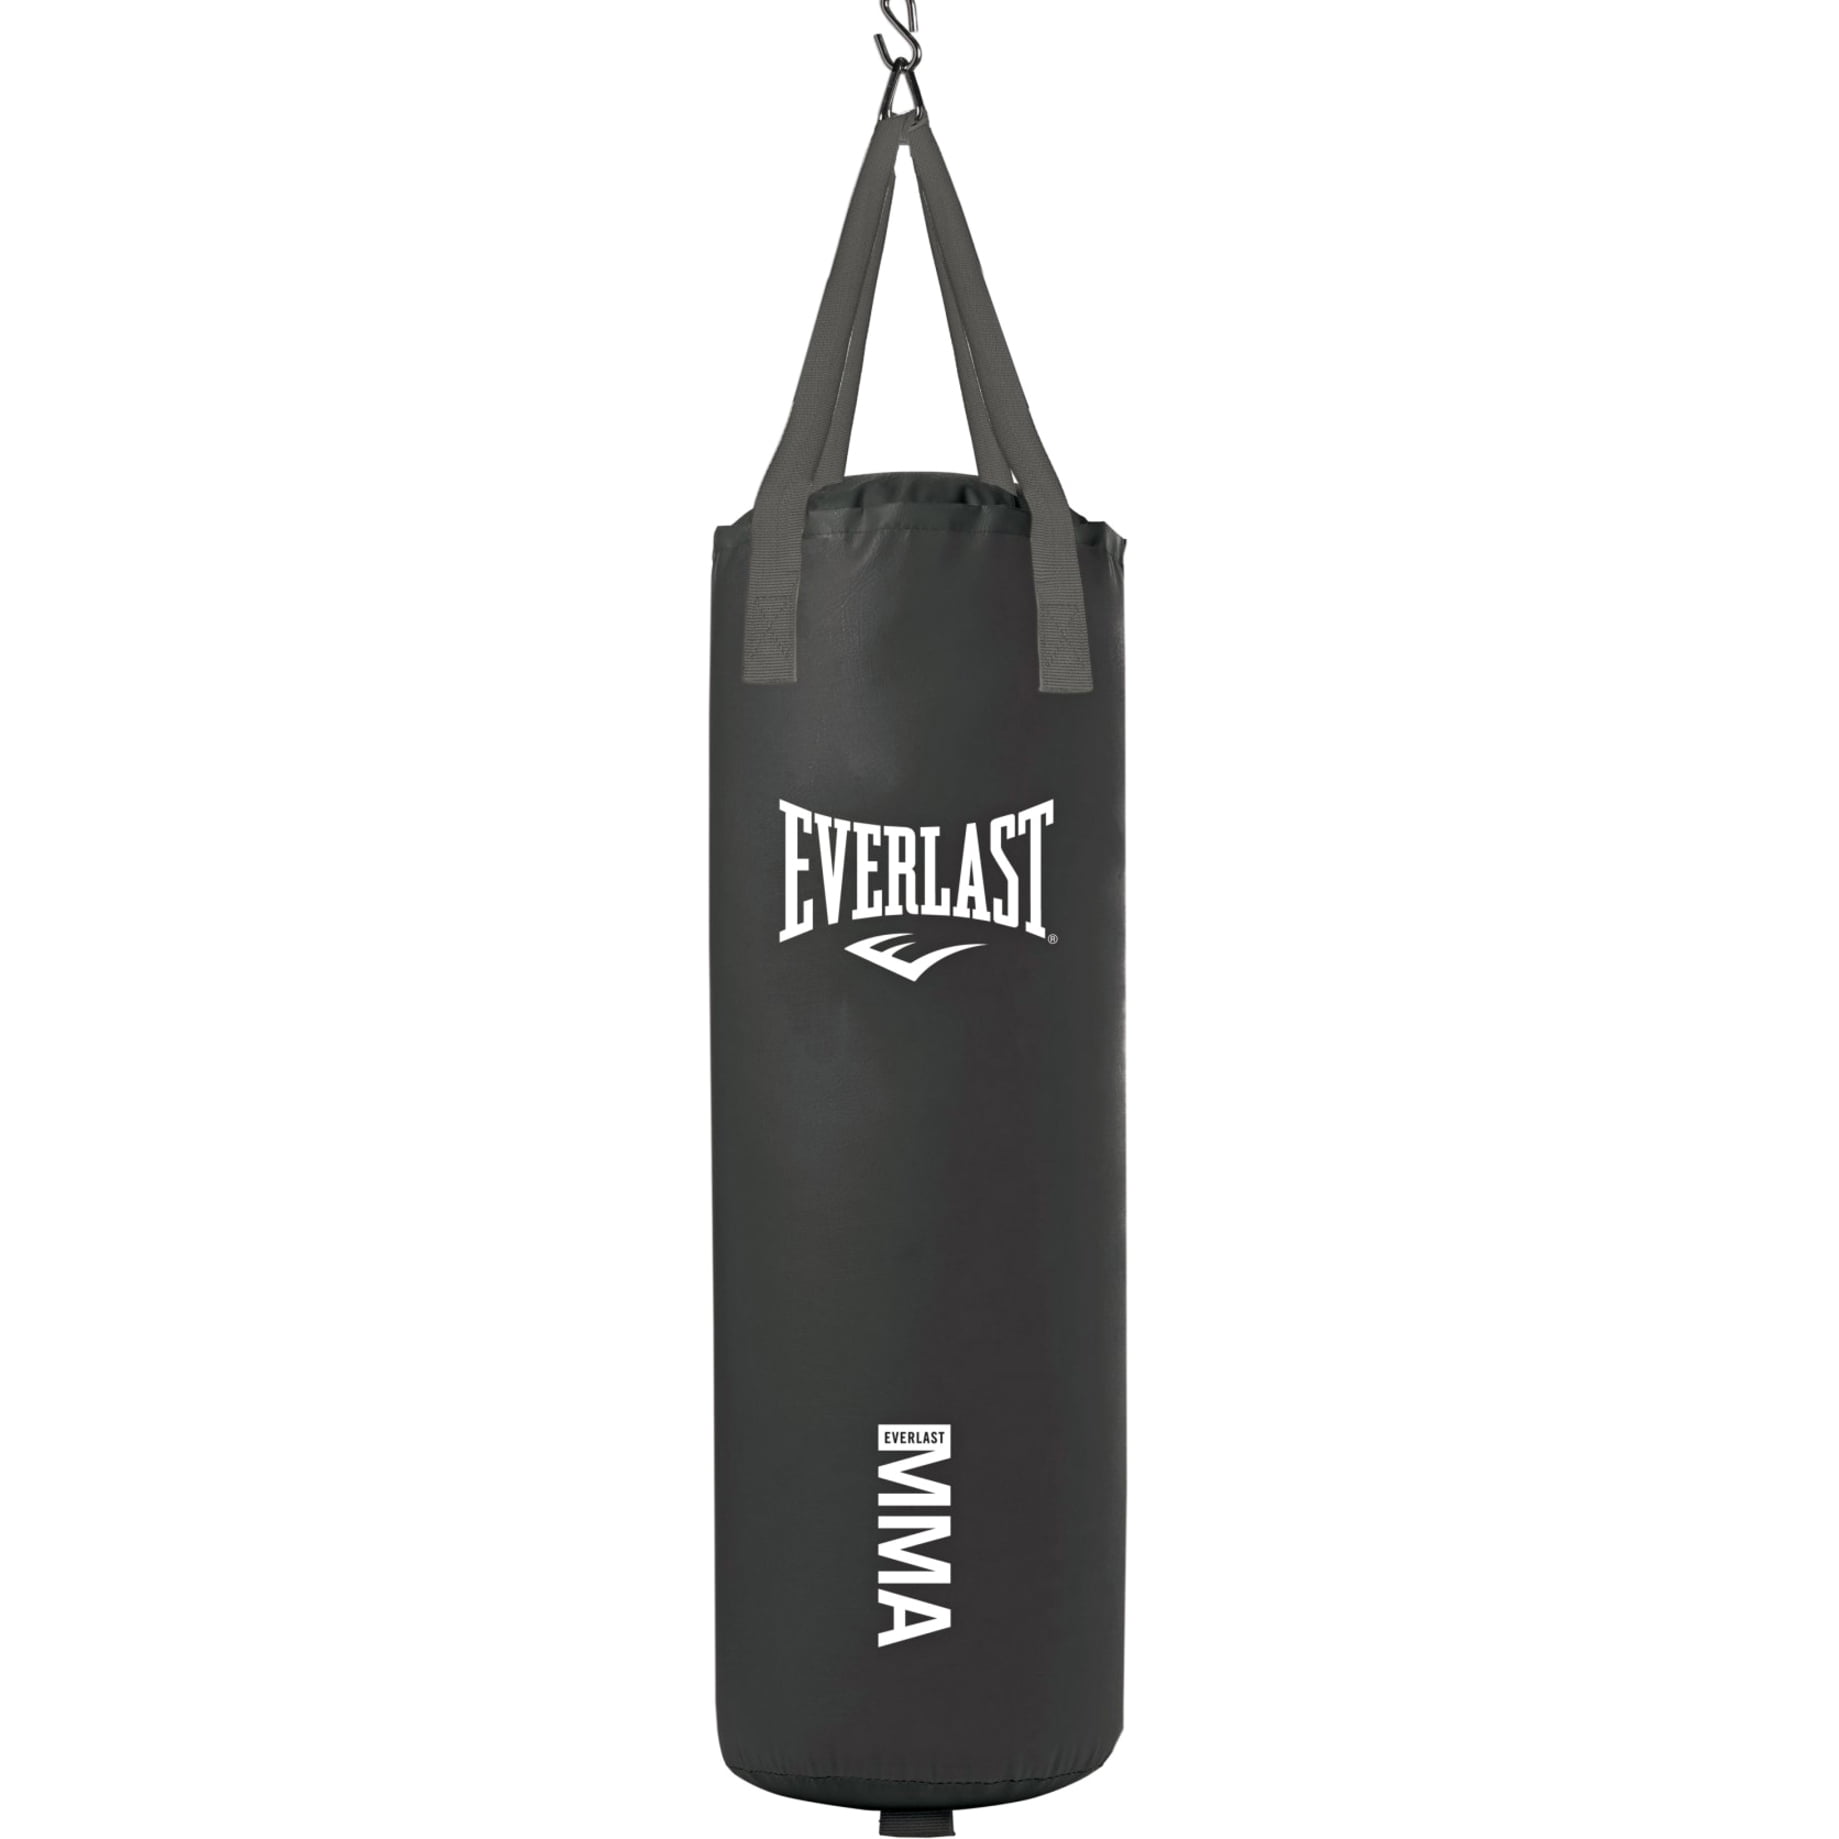 Everlast NevaTear 70 Pound Hanging MMA/Boxing Heavy Punching Bag Open Box 